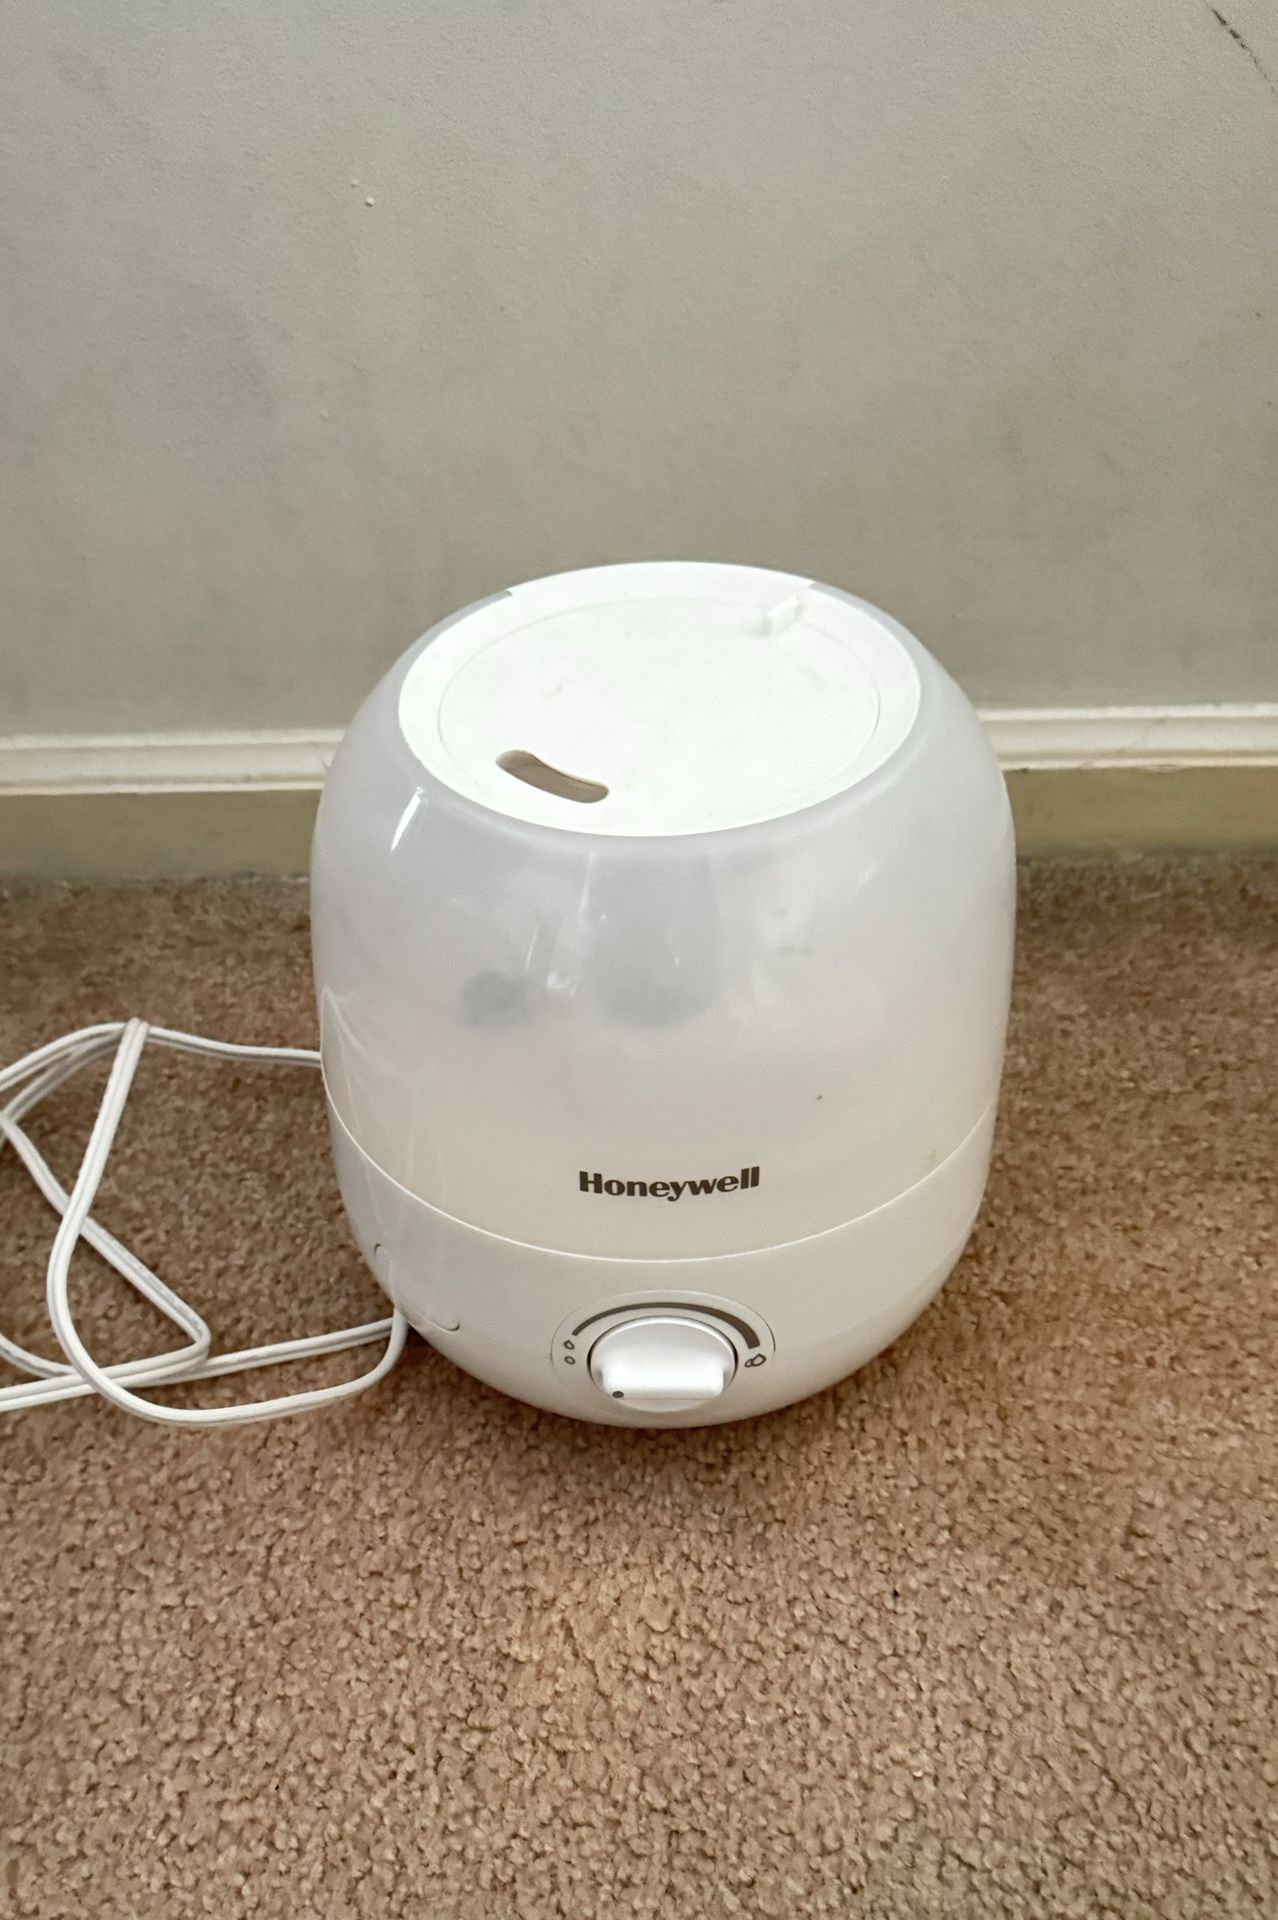 Honeywell Humidifier 